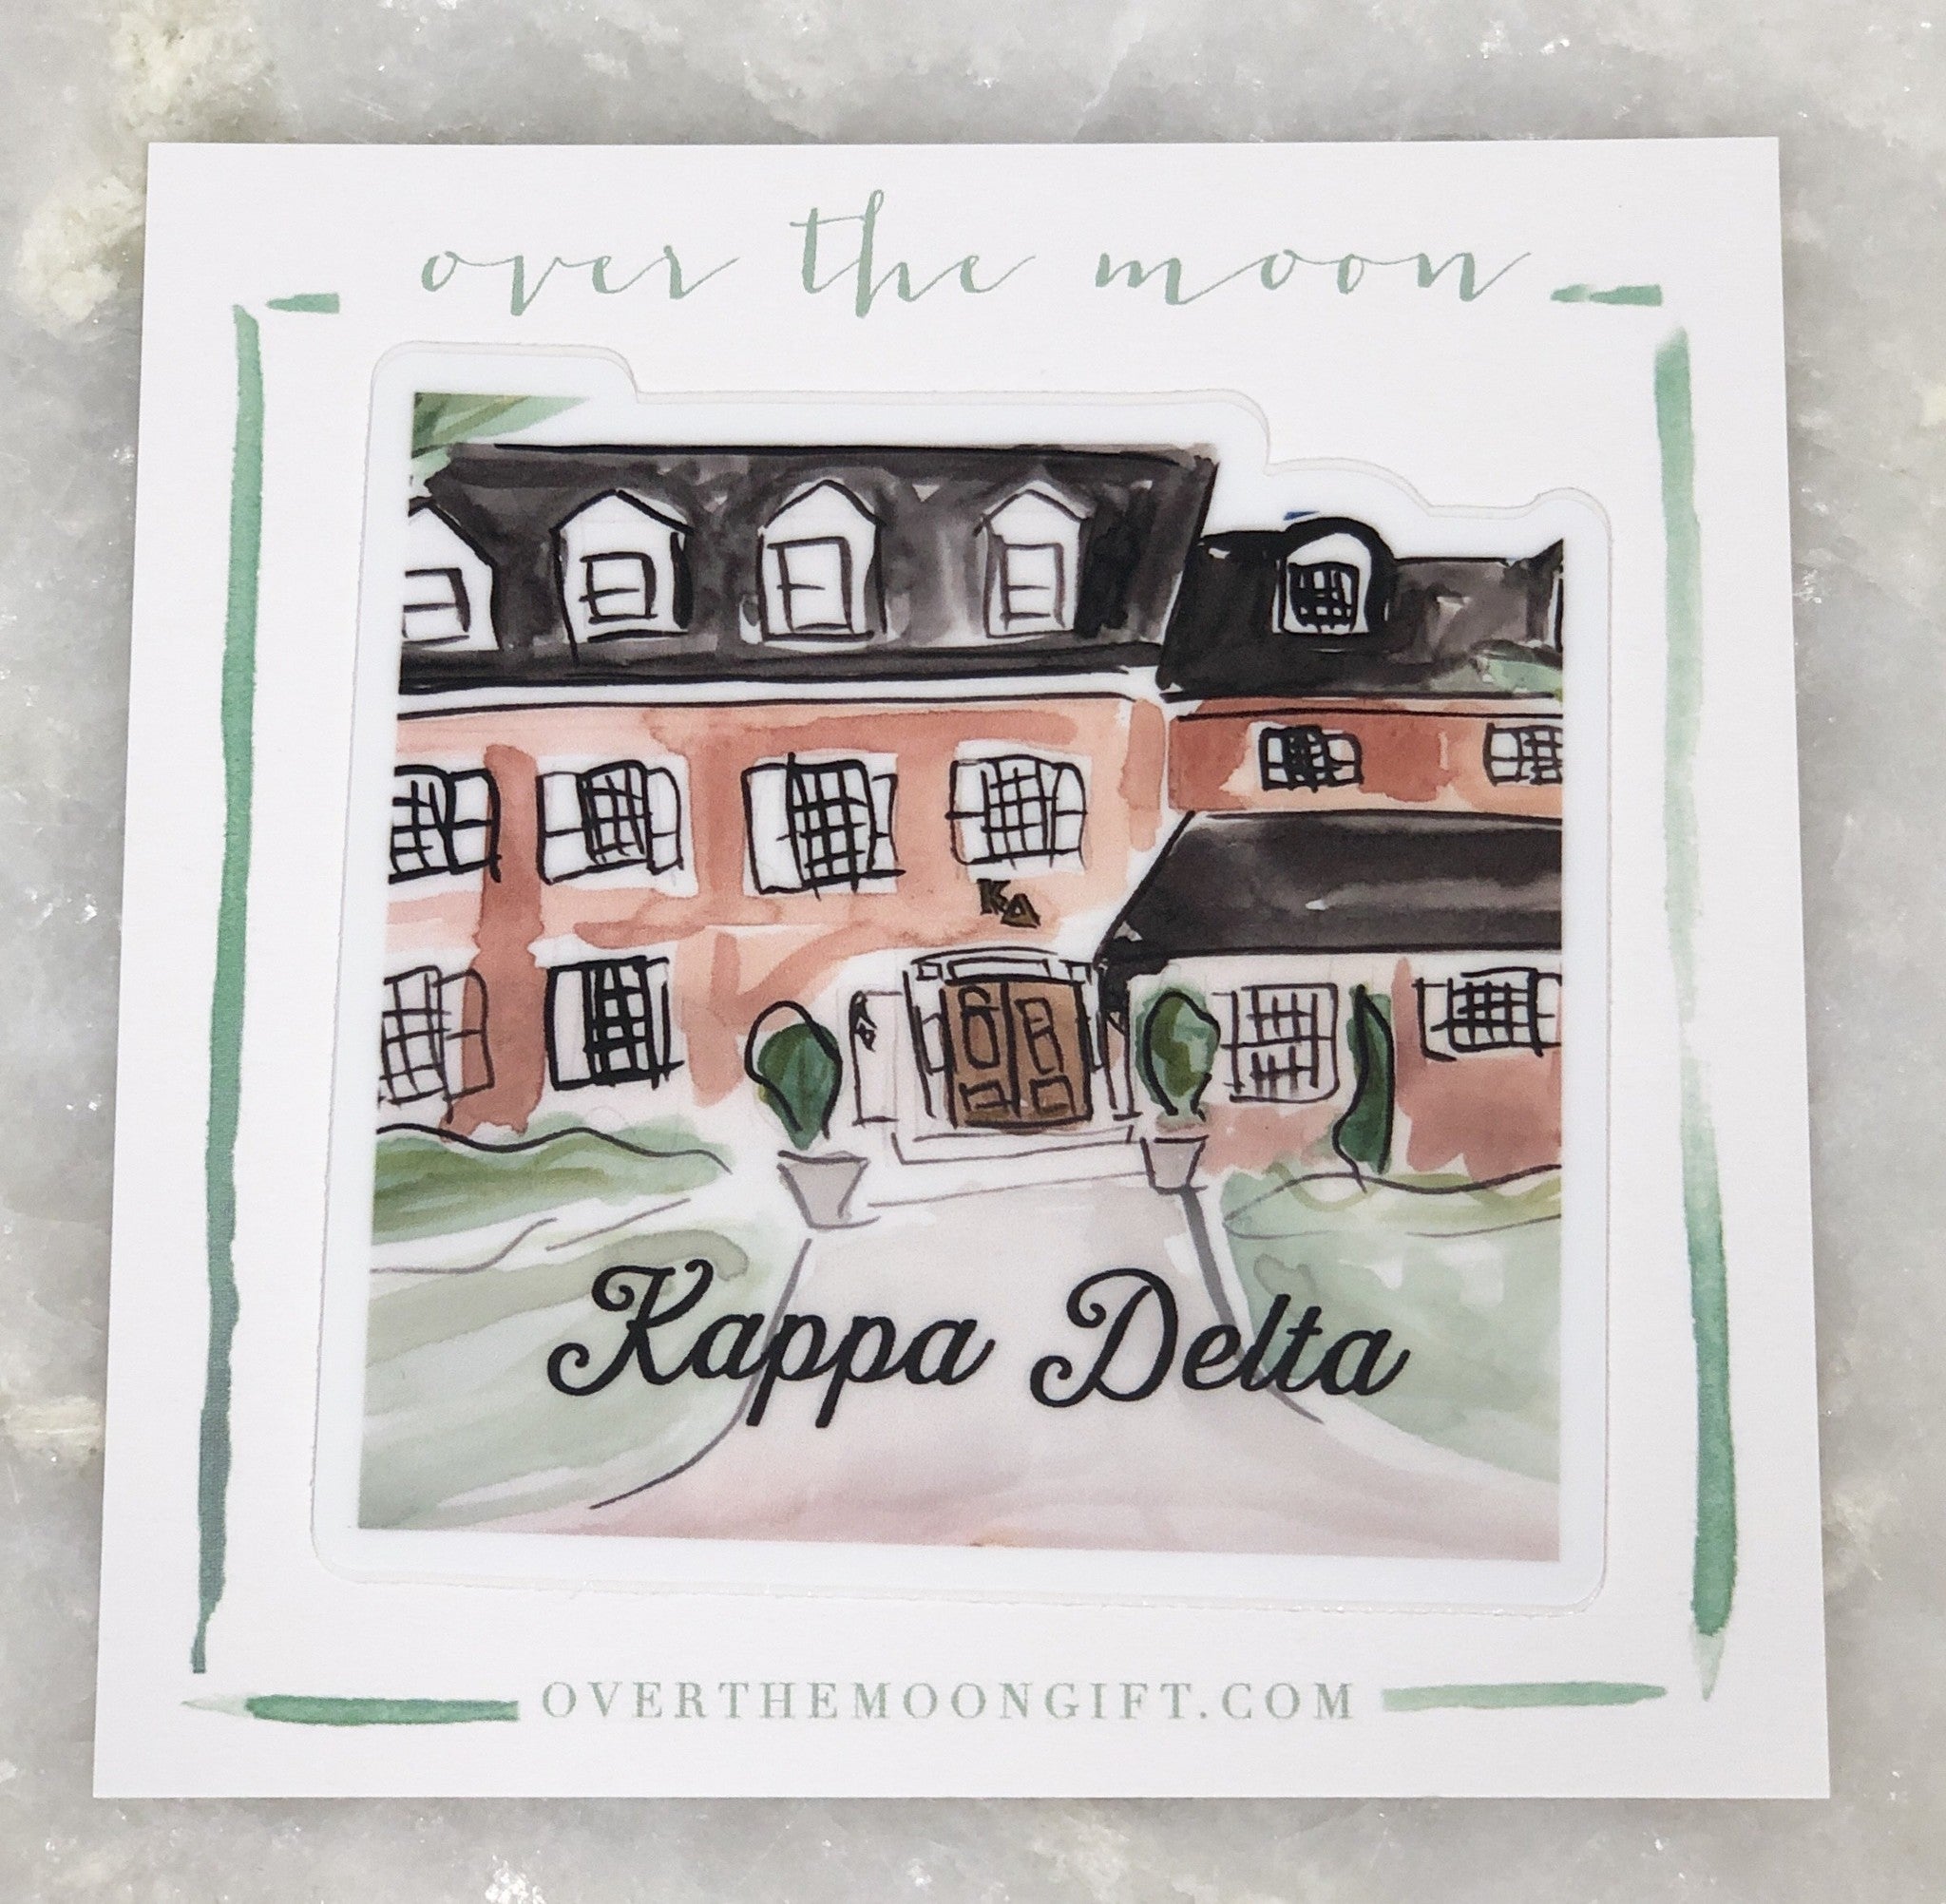 Kappa Delta House Decal